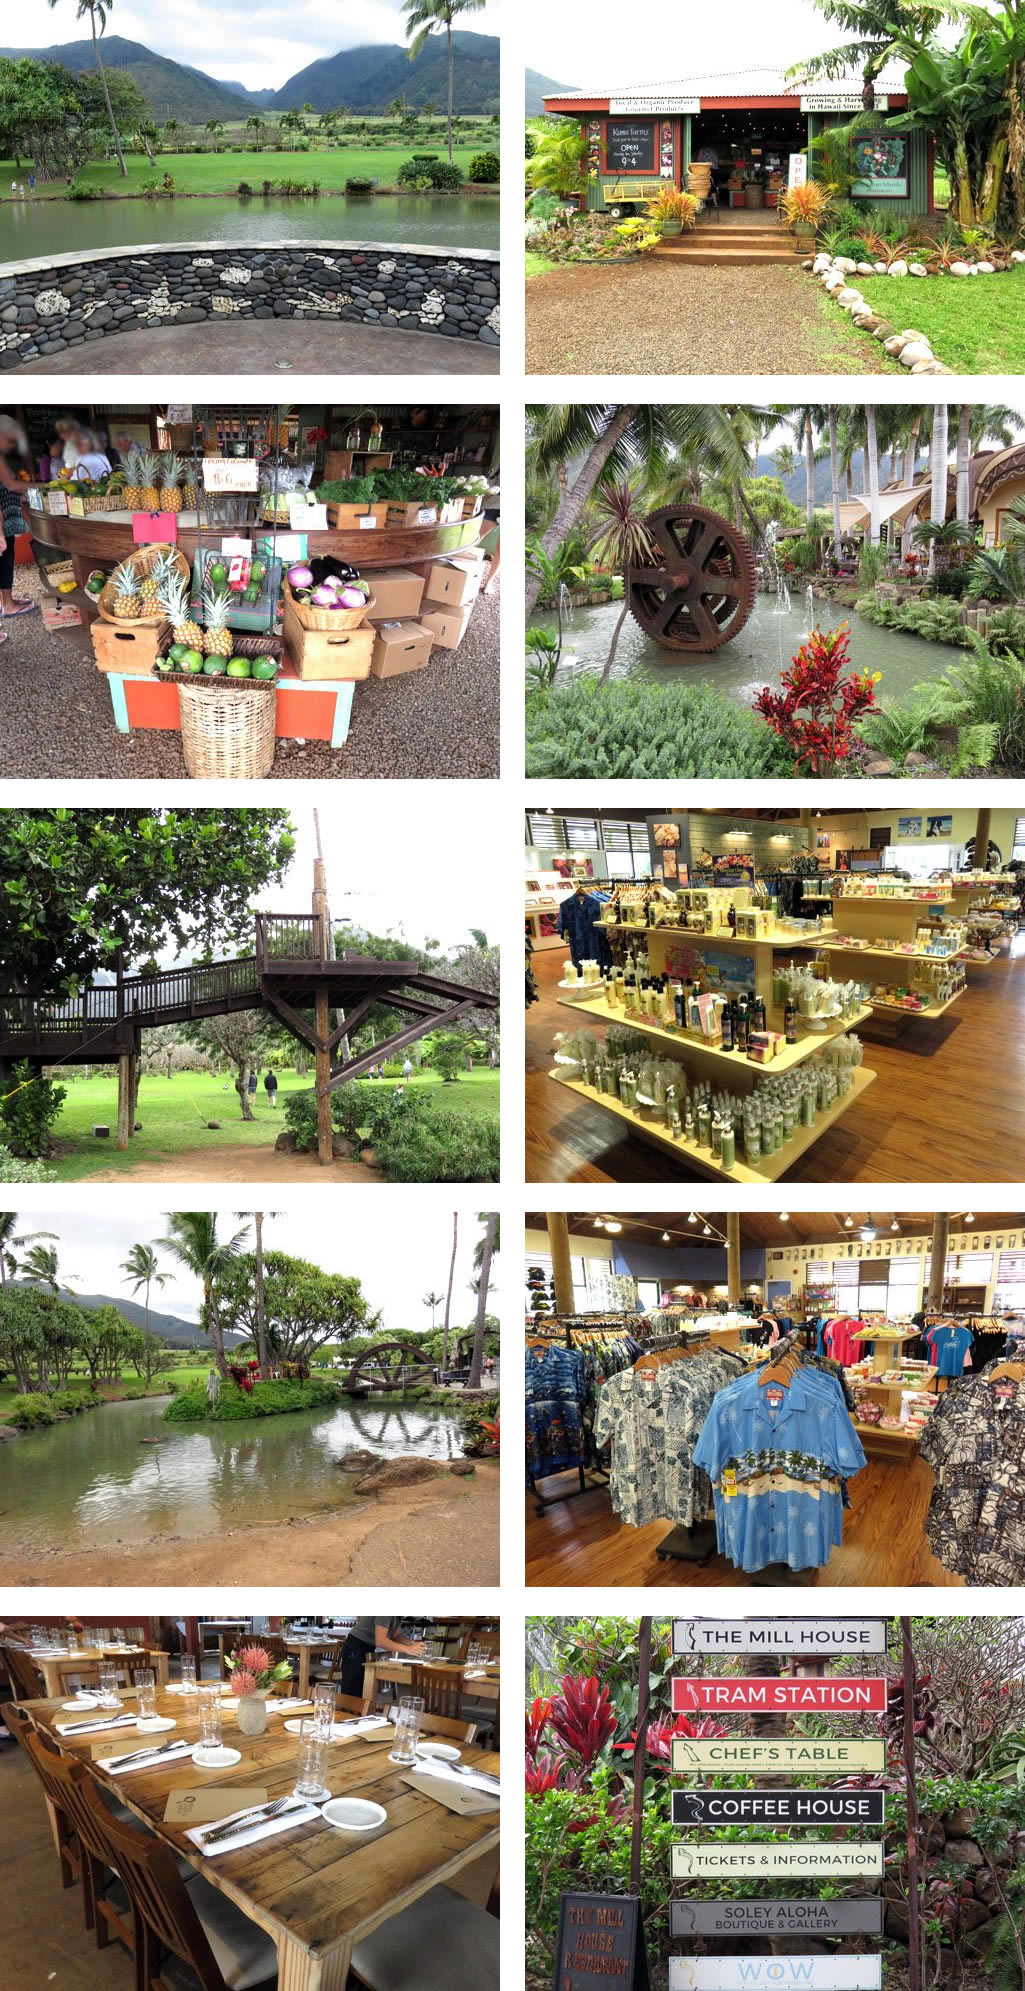 Maui Tropical Plantation